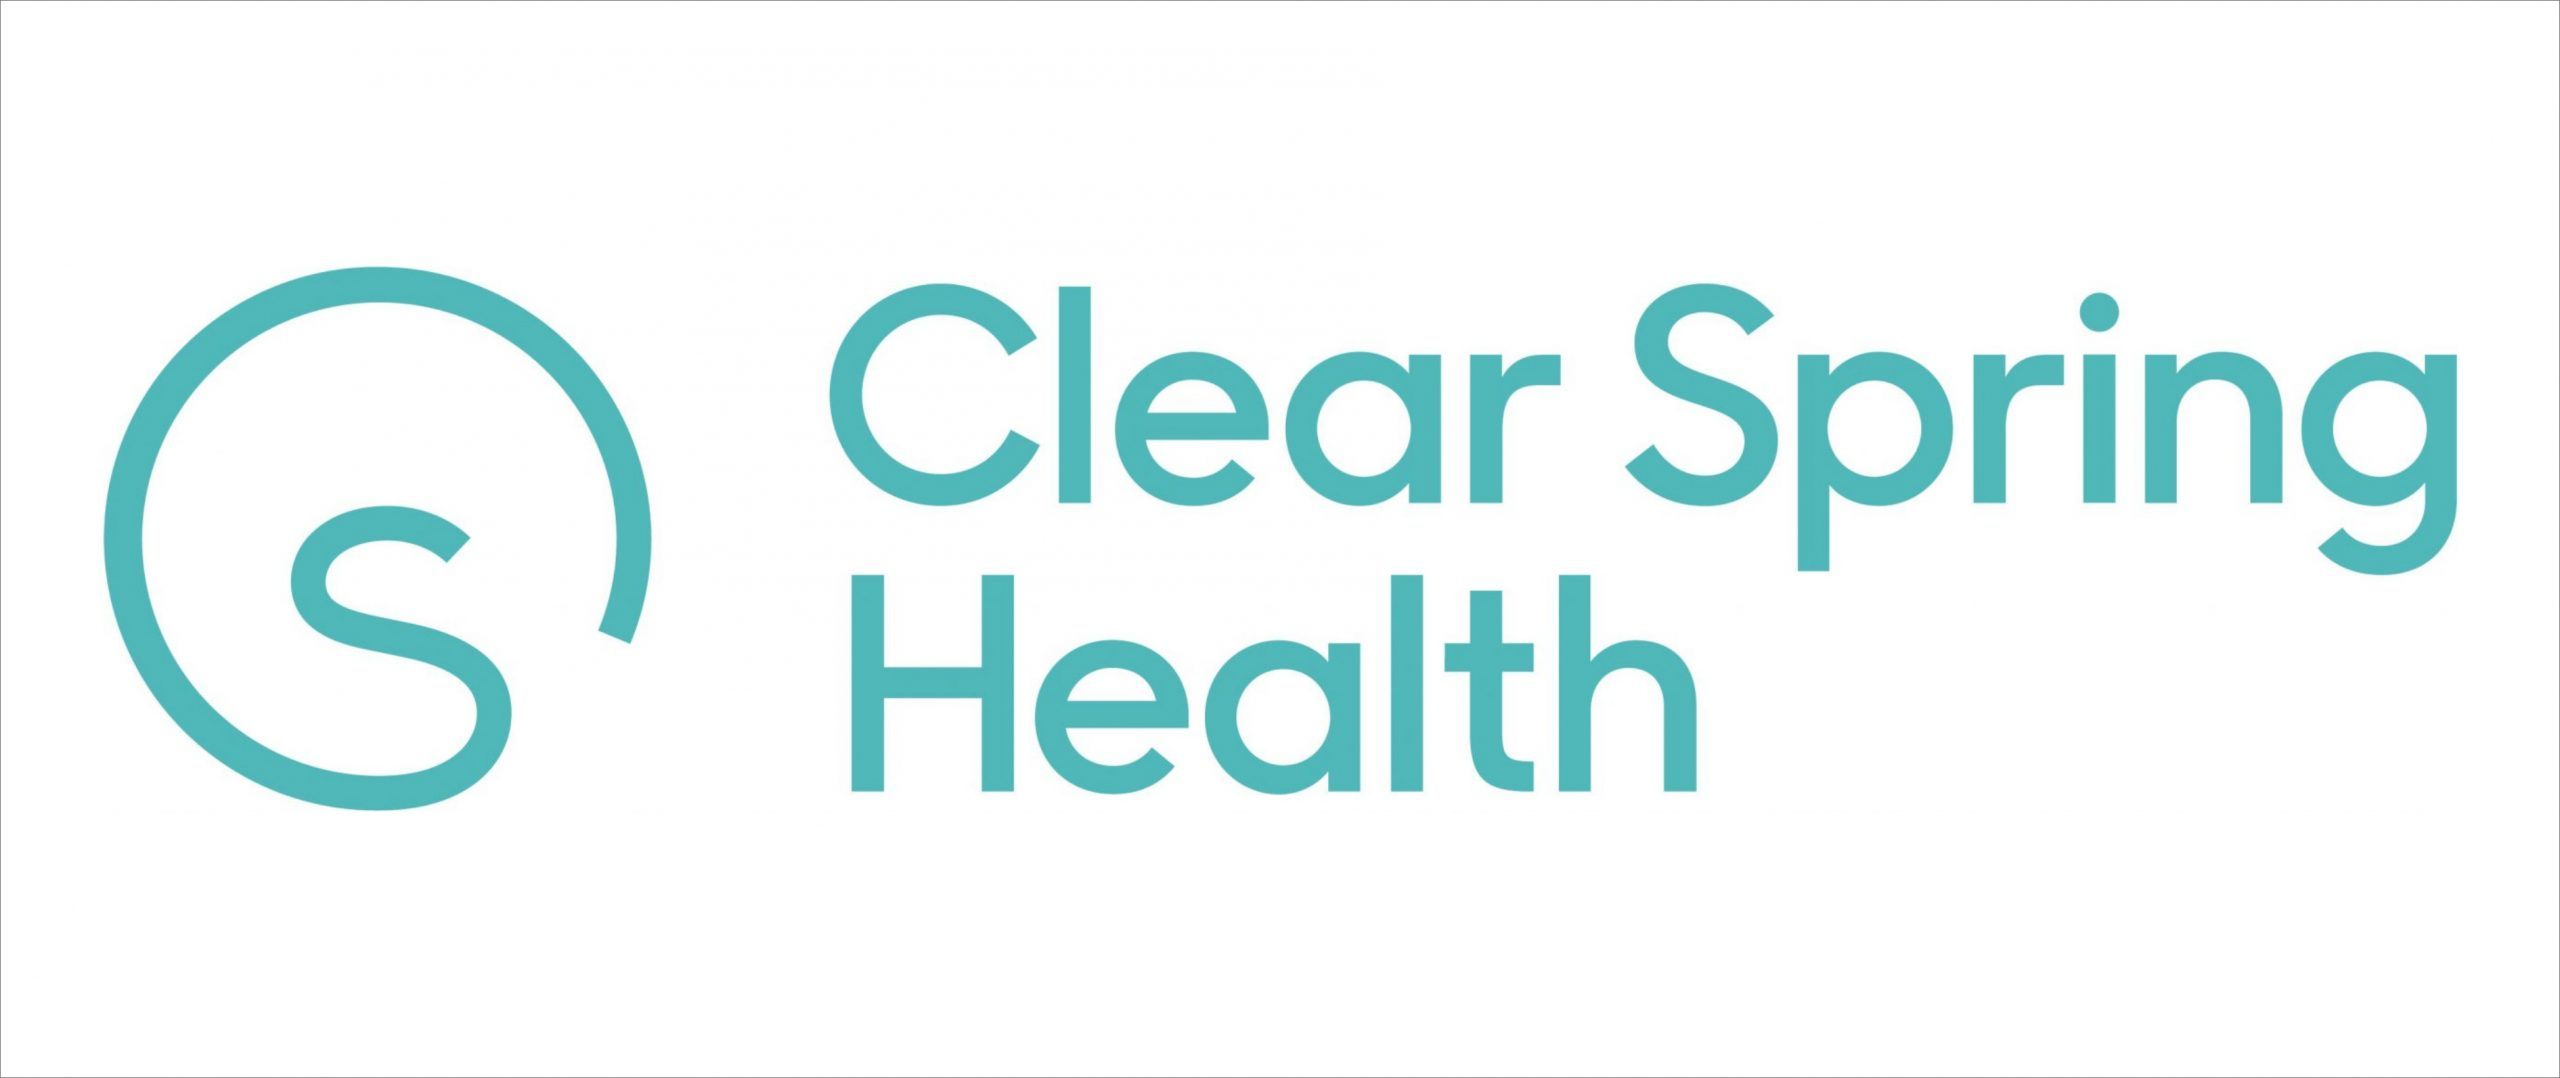 clear spring health logo